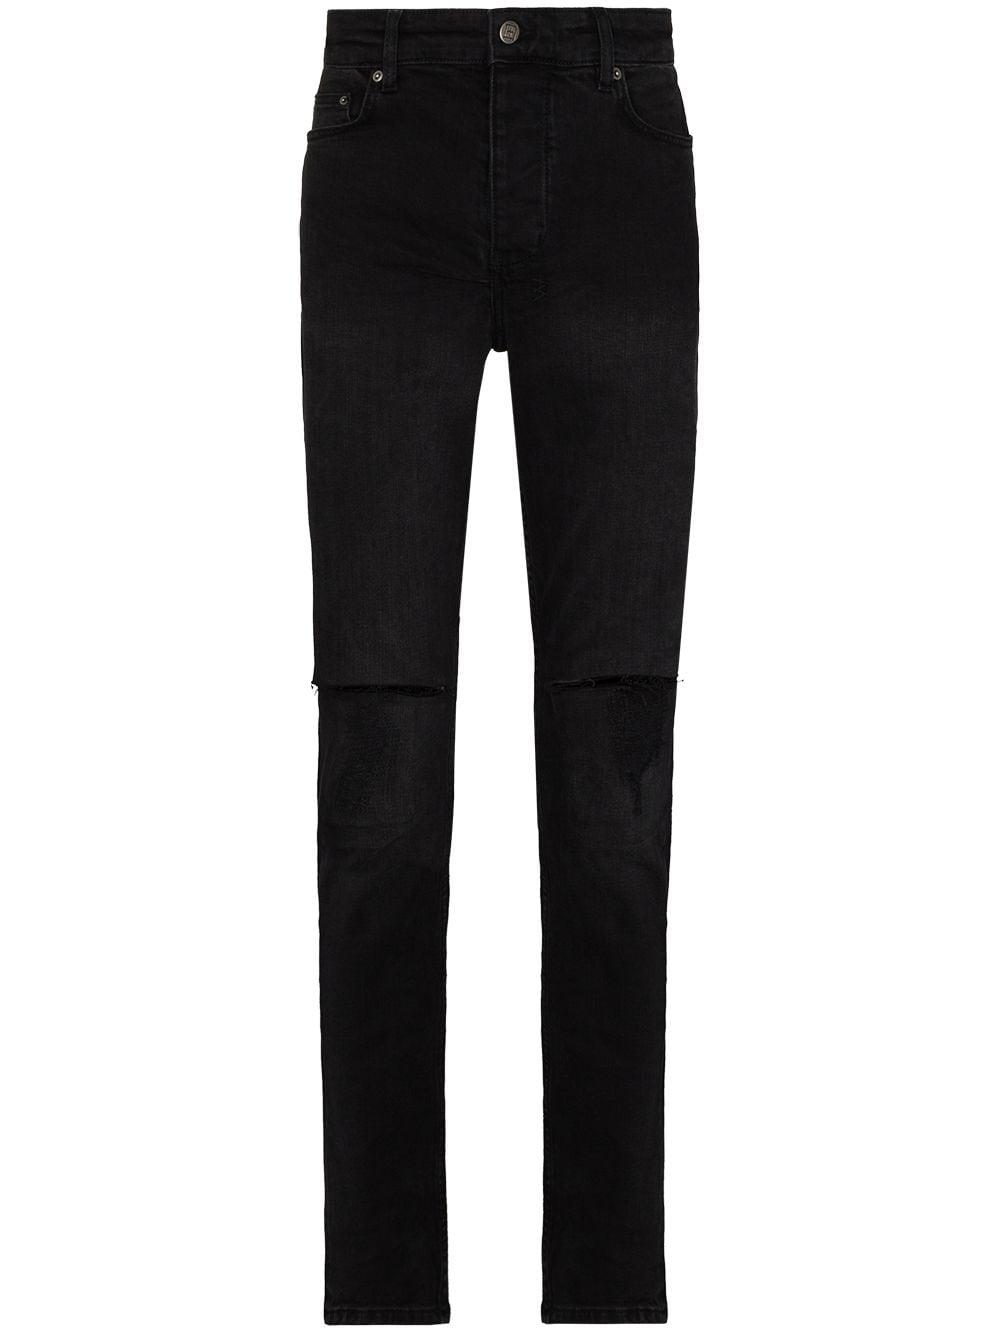 Ksubi Denim Chitch Krow Krushed Slim-fit Jeans in Black for Men - Lyst